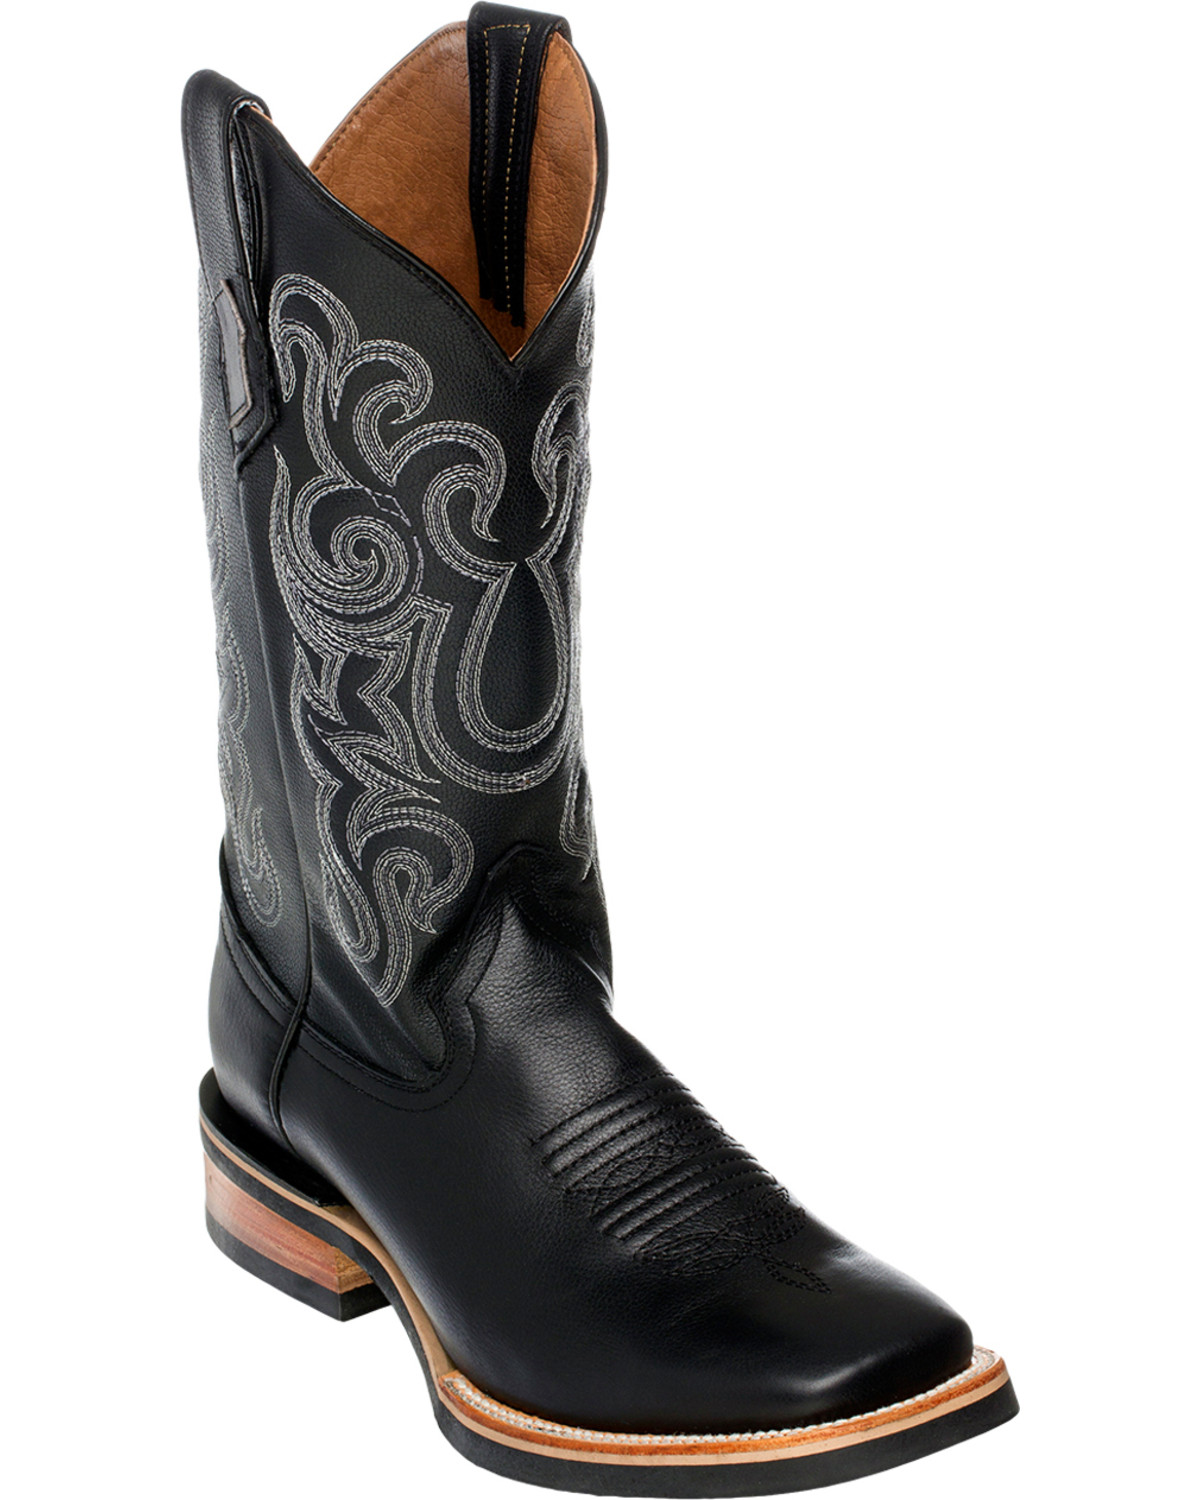 Ferrini Men's French Calf Leather Cowboy Boots - Square Toe